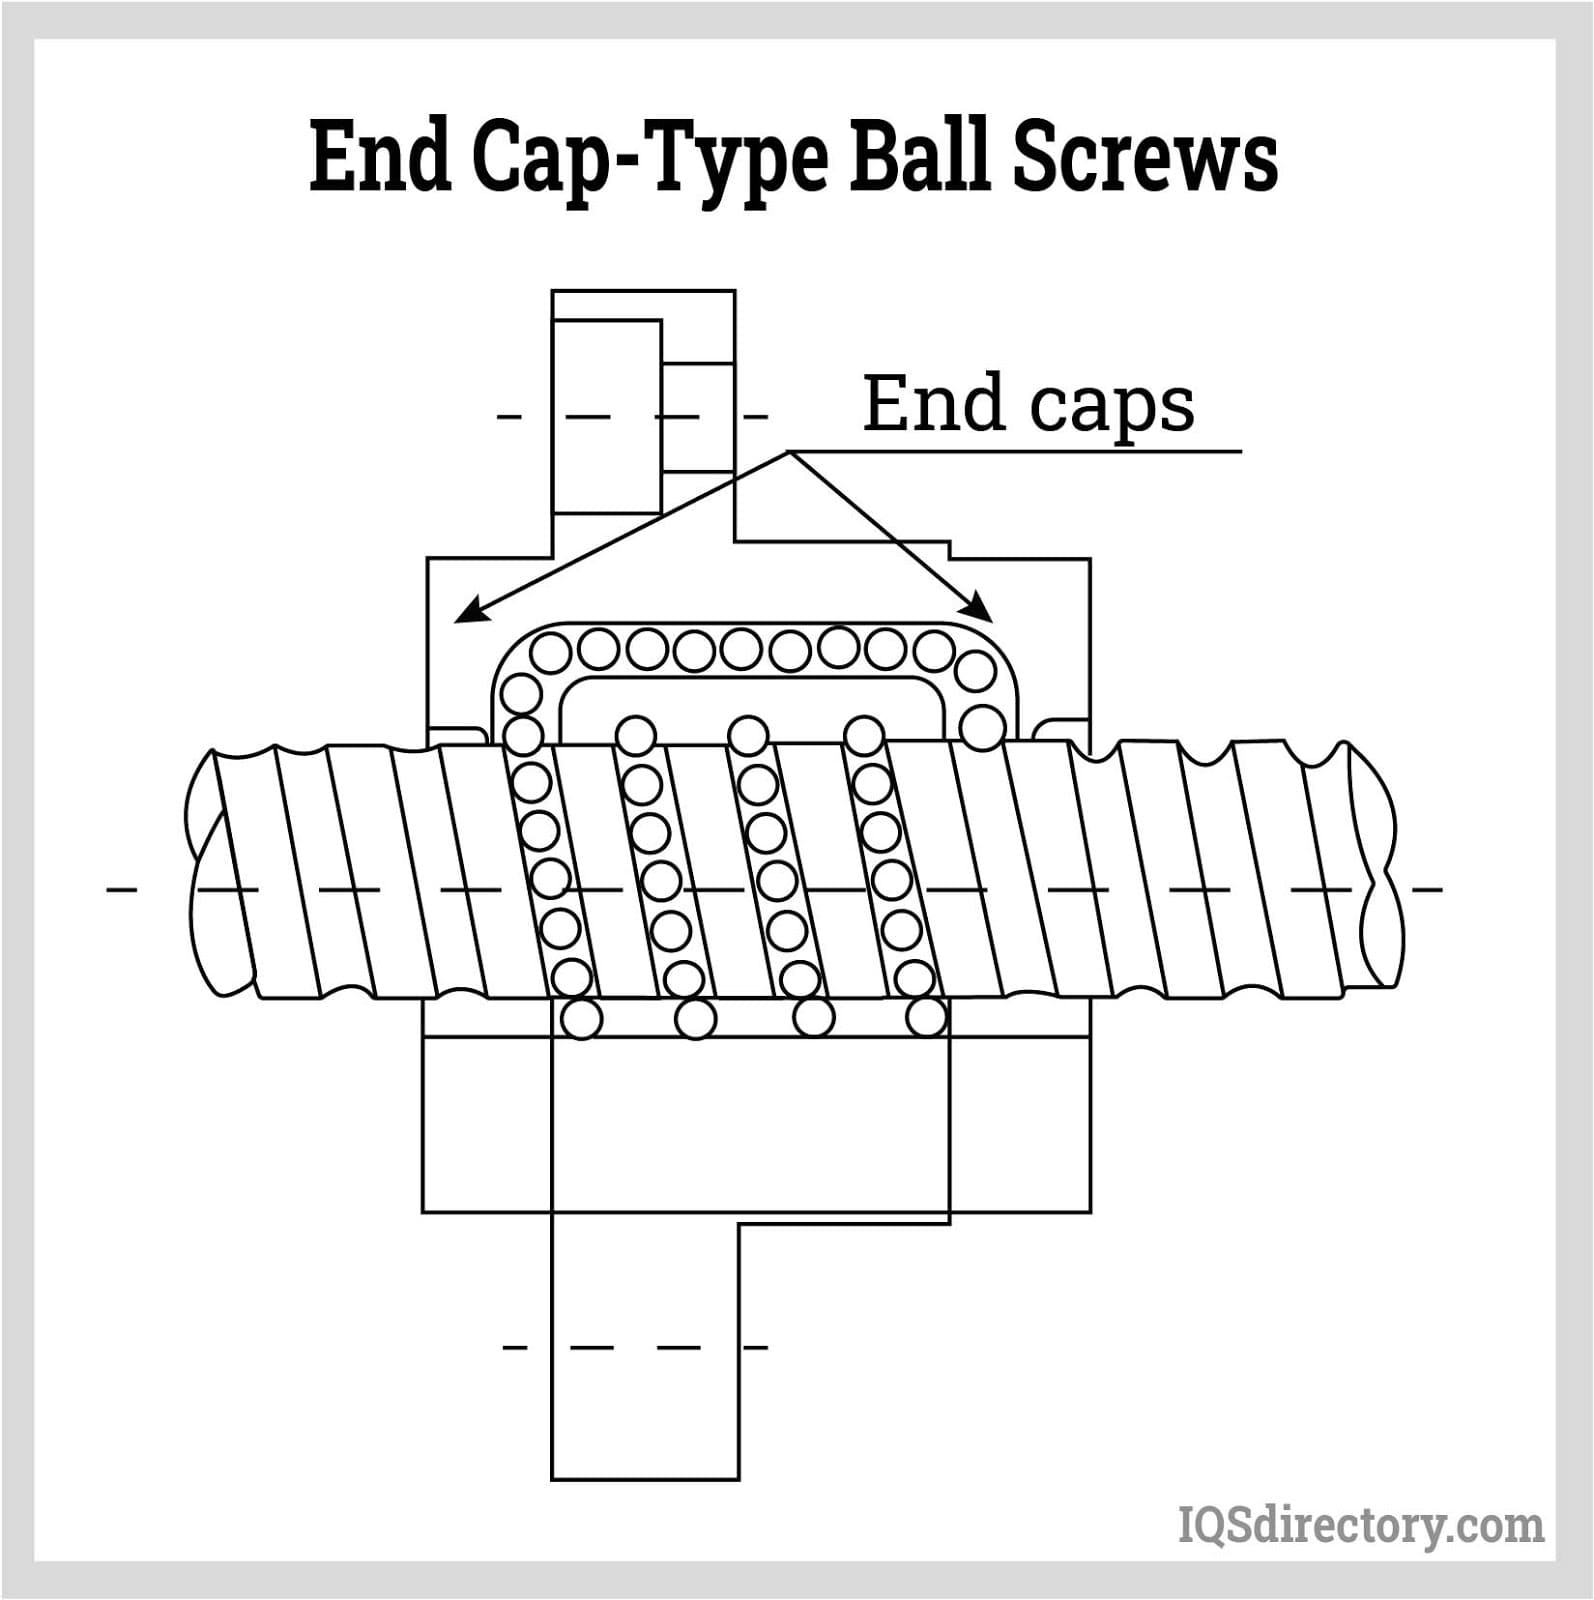 End Cap-Type Ball Screws